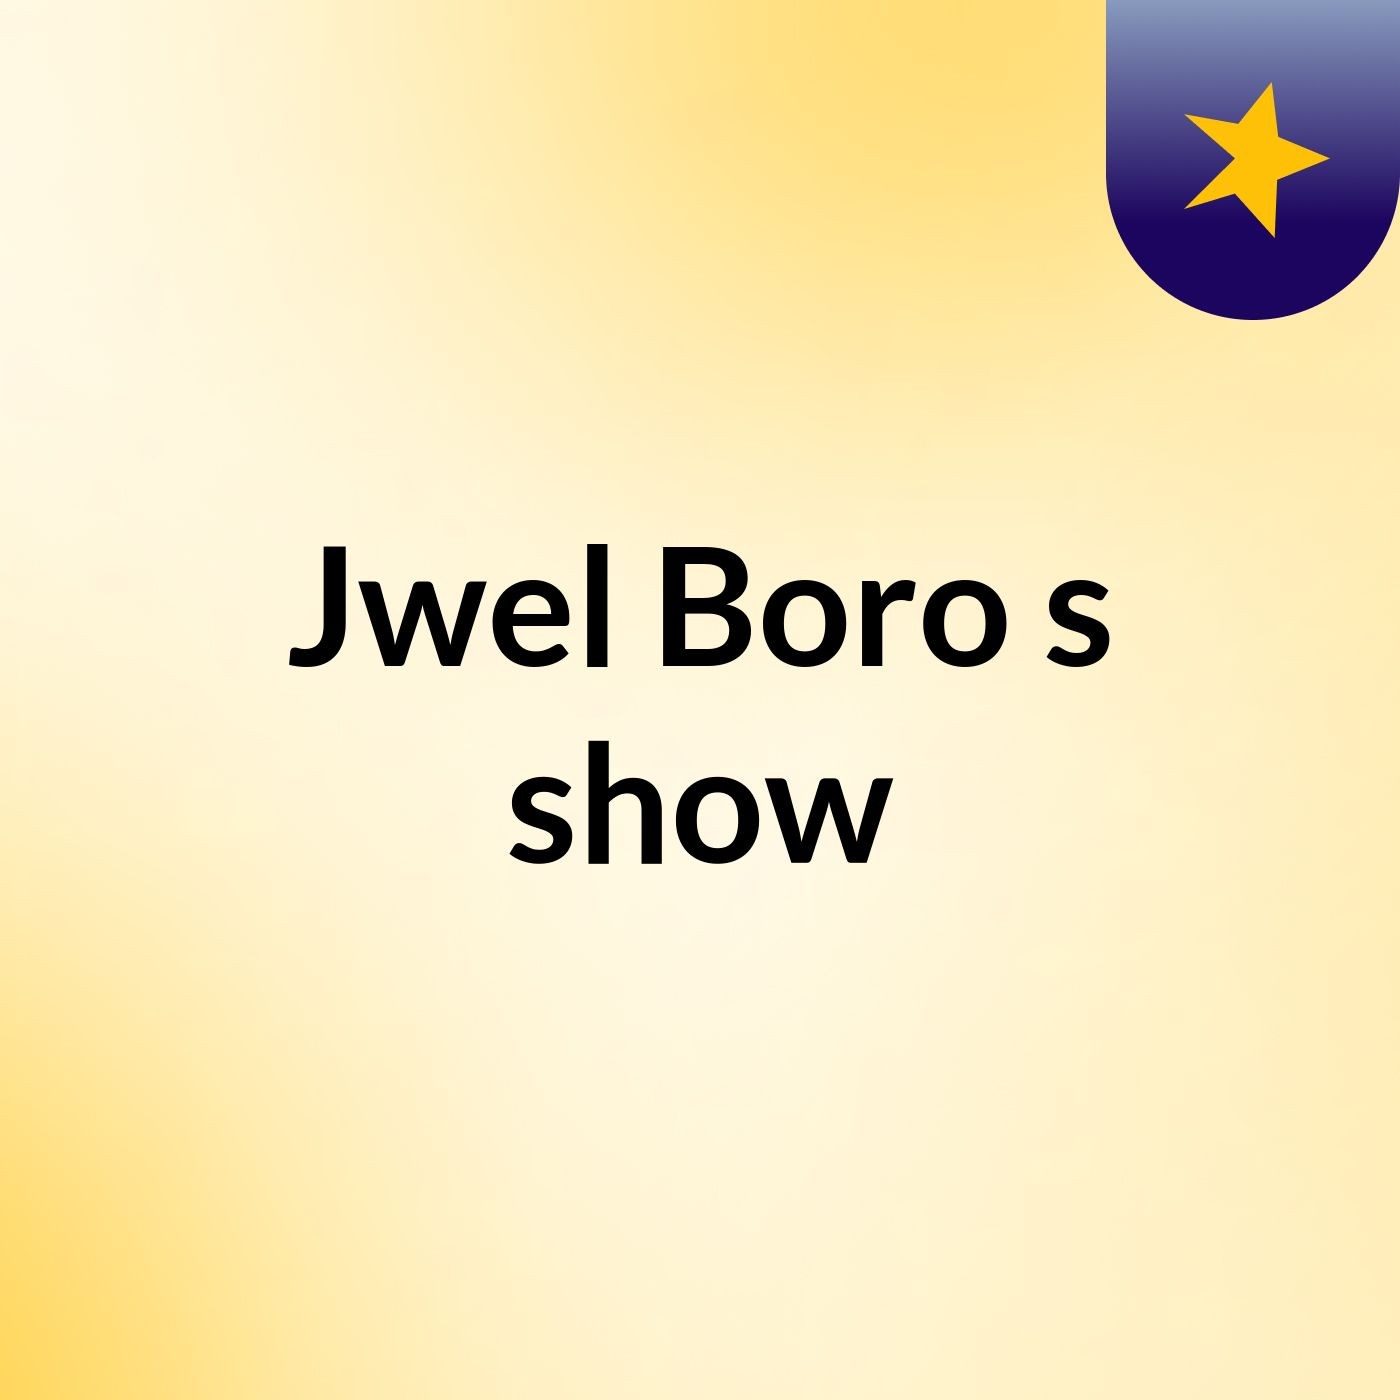 Jwel Boro's show